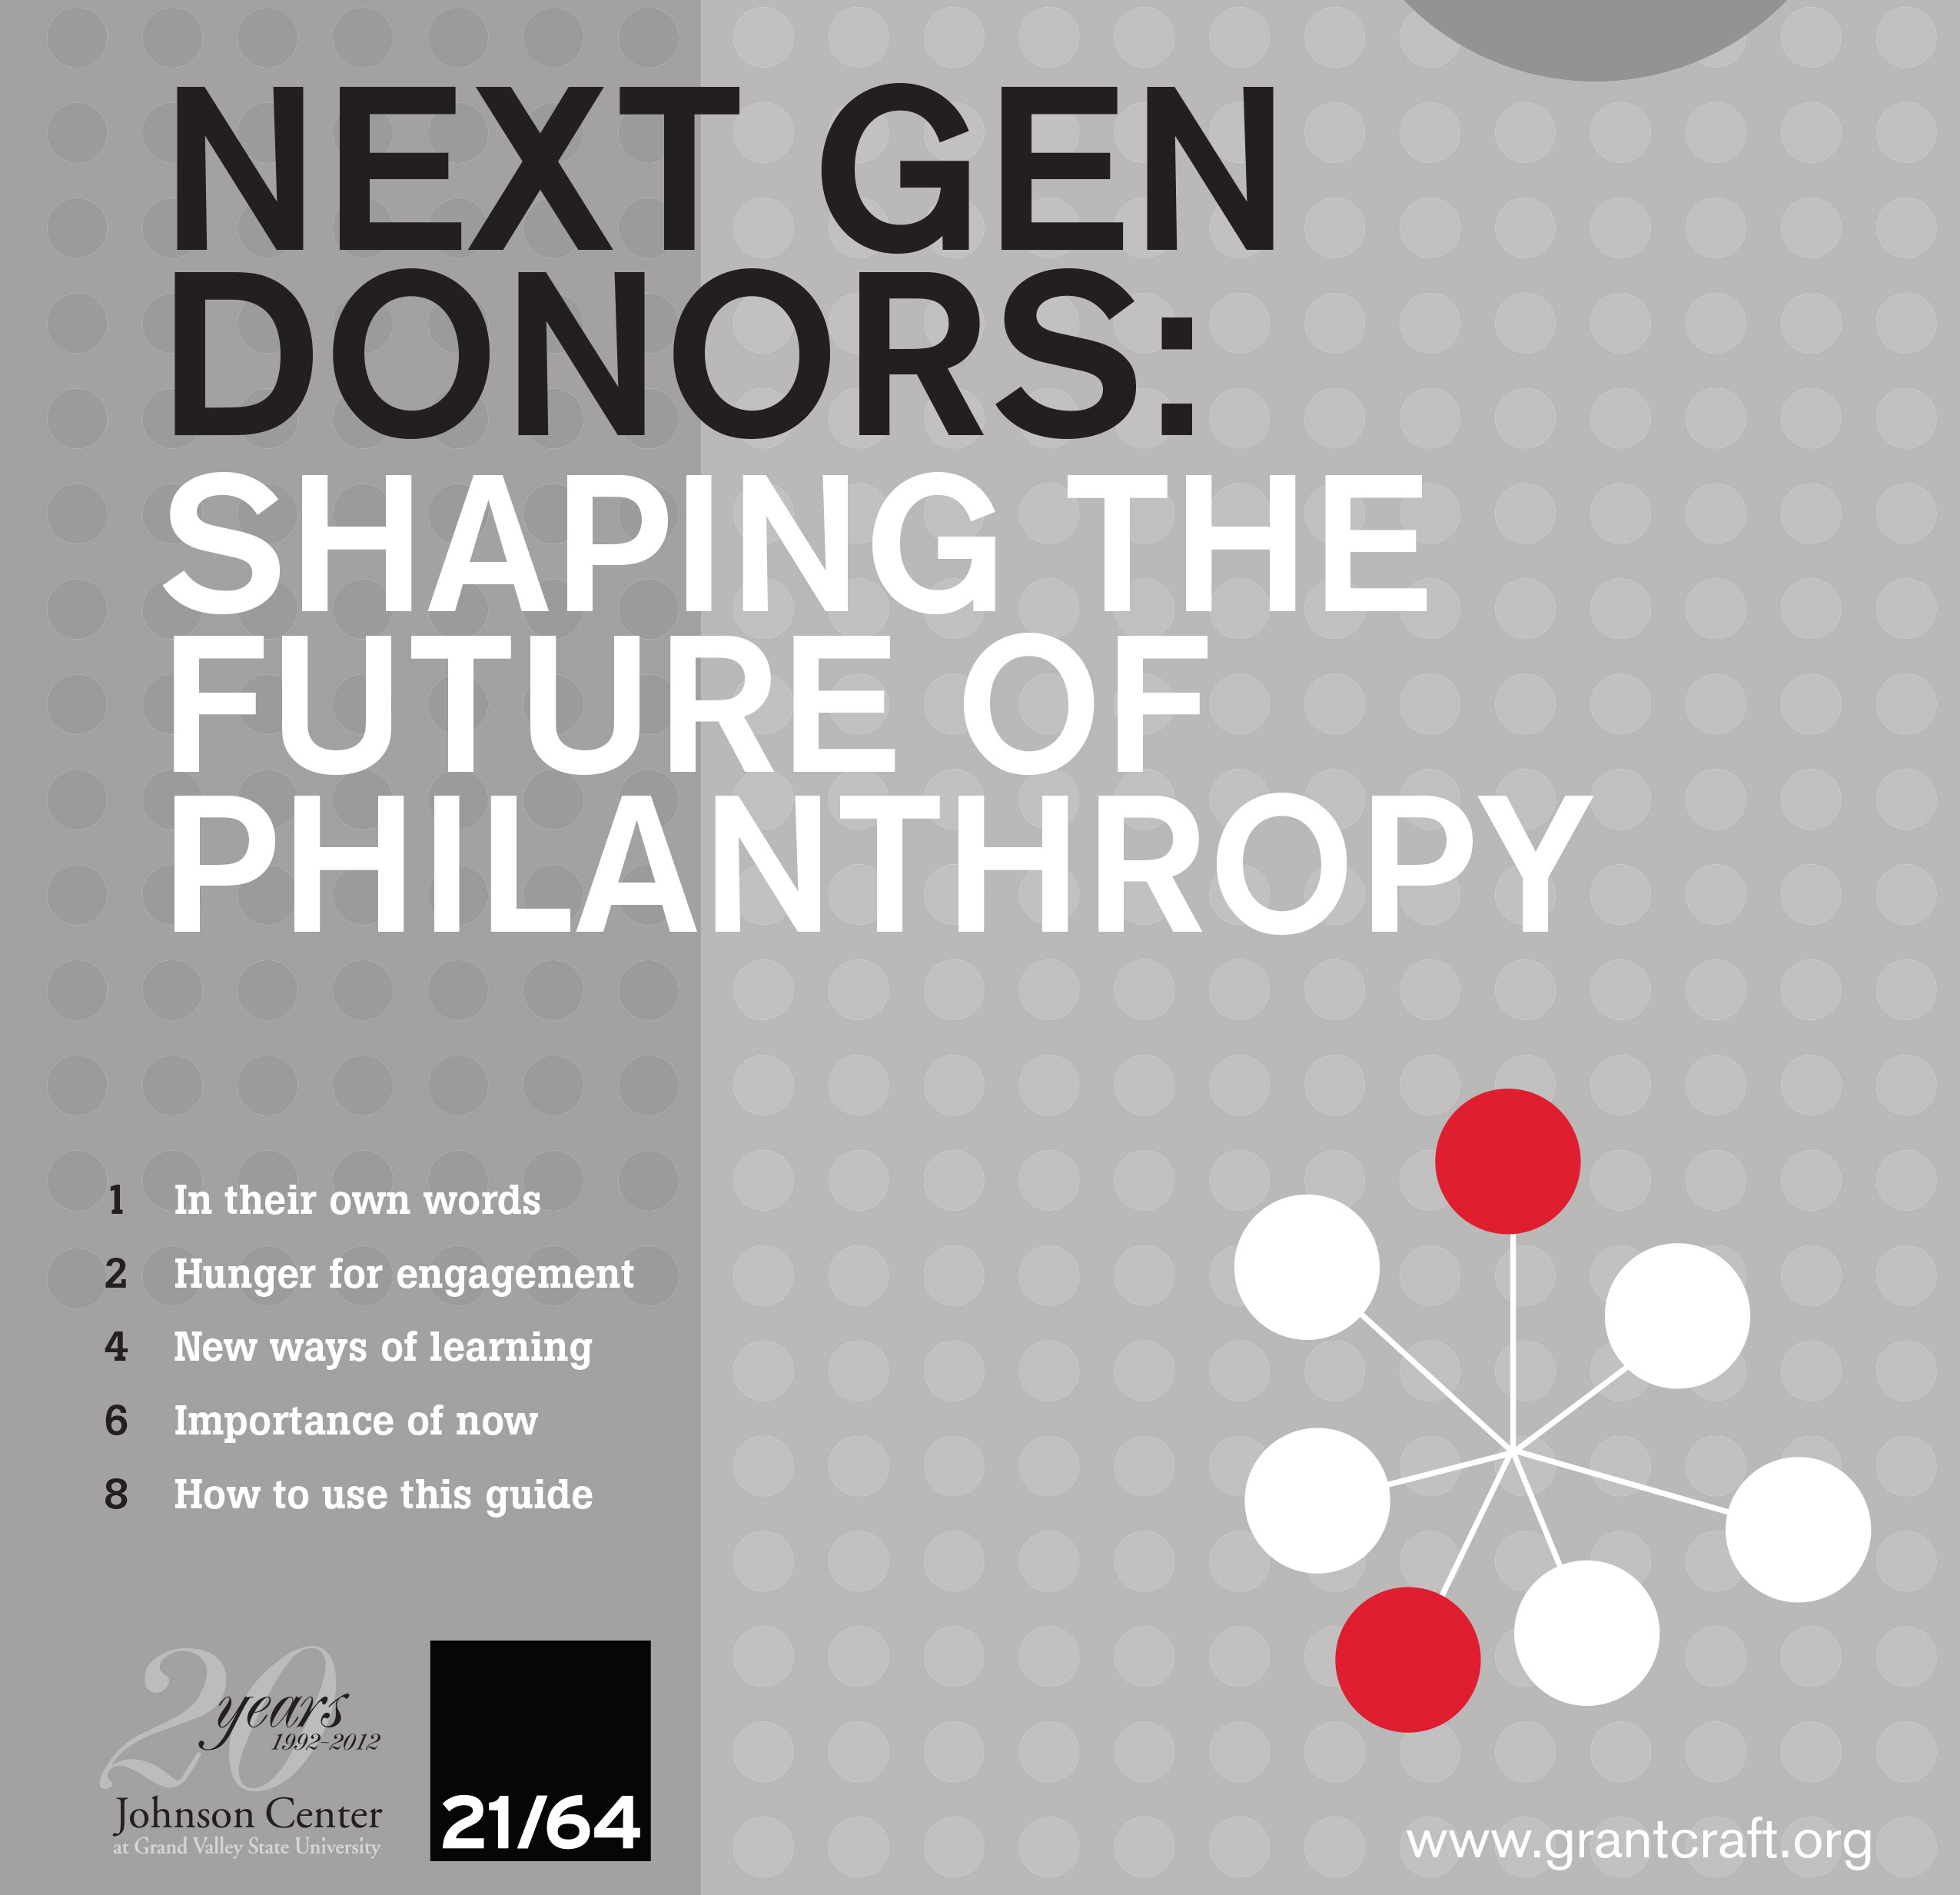 Next Gen Donors